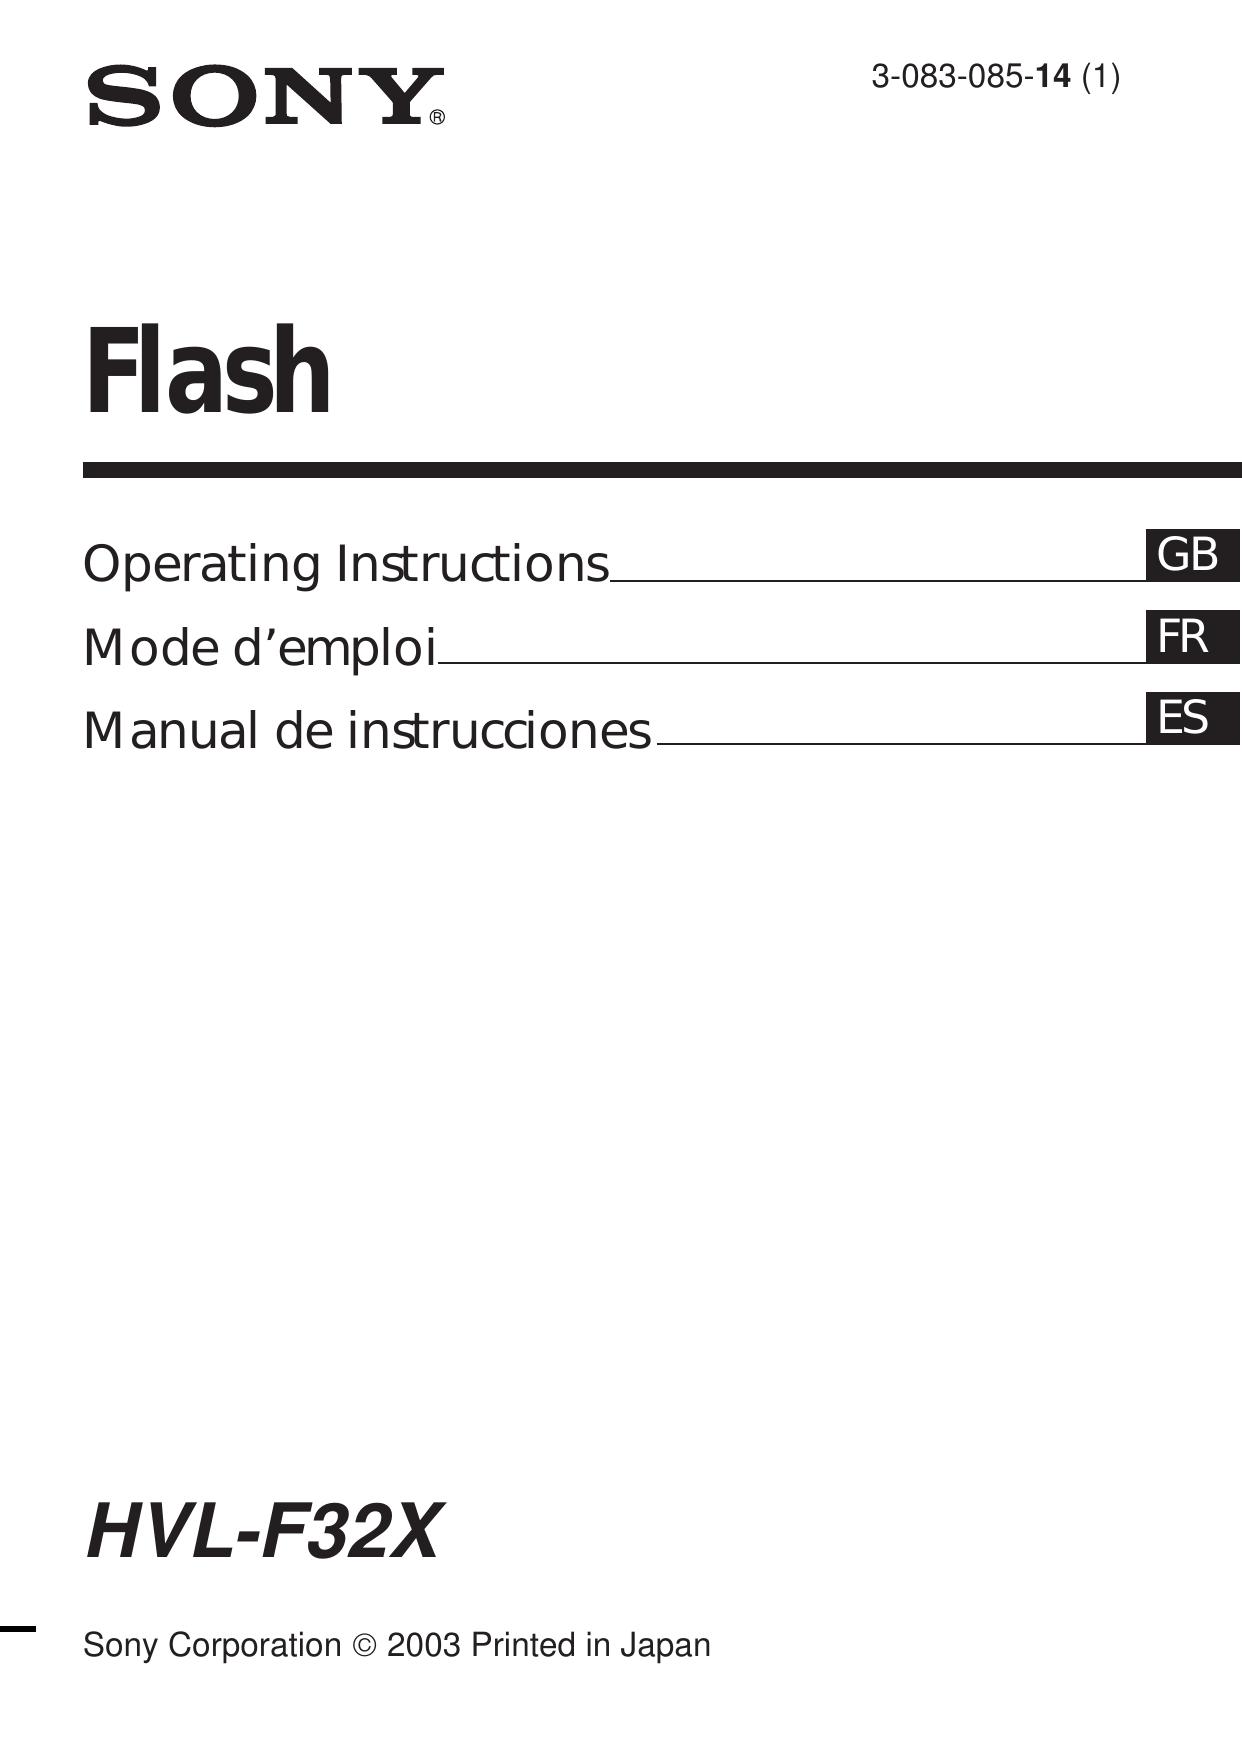 Sony HVL-F32X Camera Flash User Manual